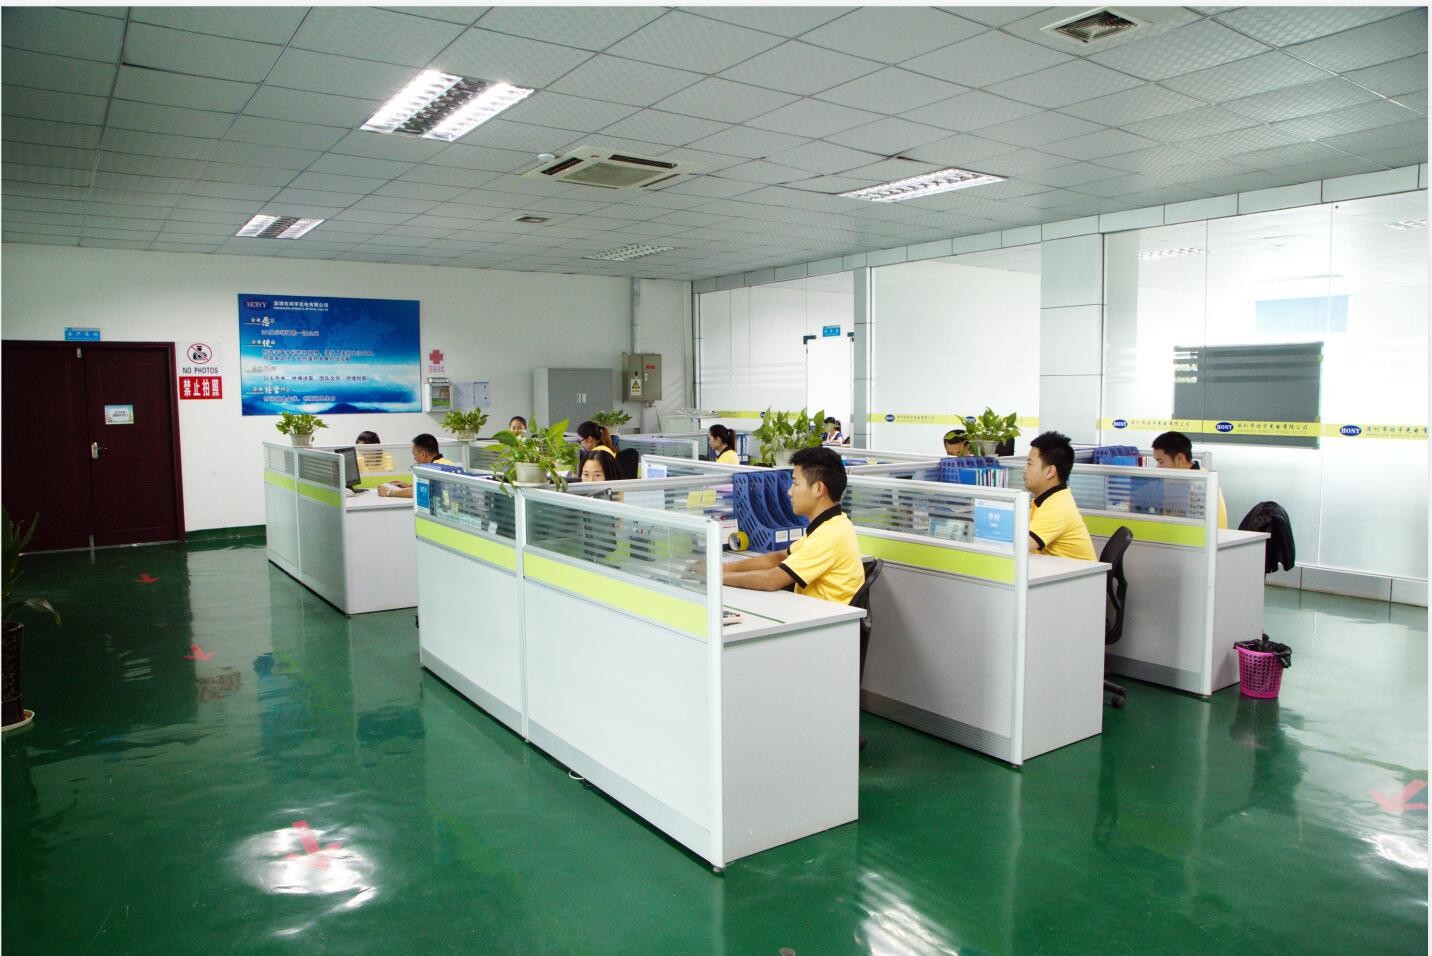 China Shenzhen HONY Optical Co., Limited Unternehmensprofil